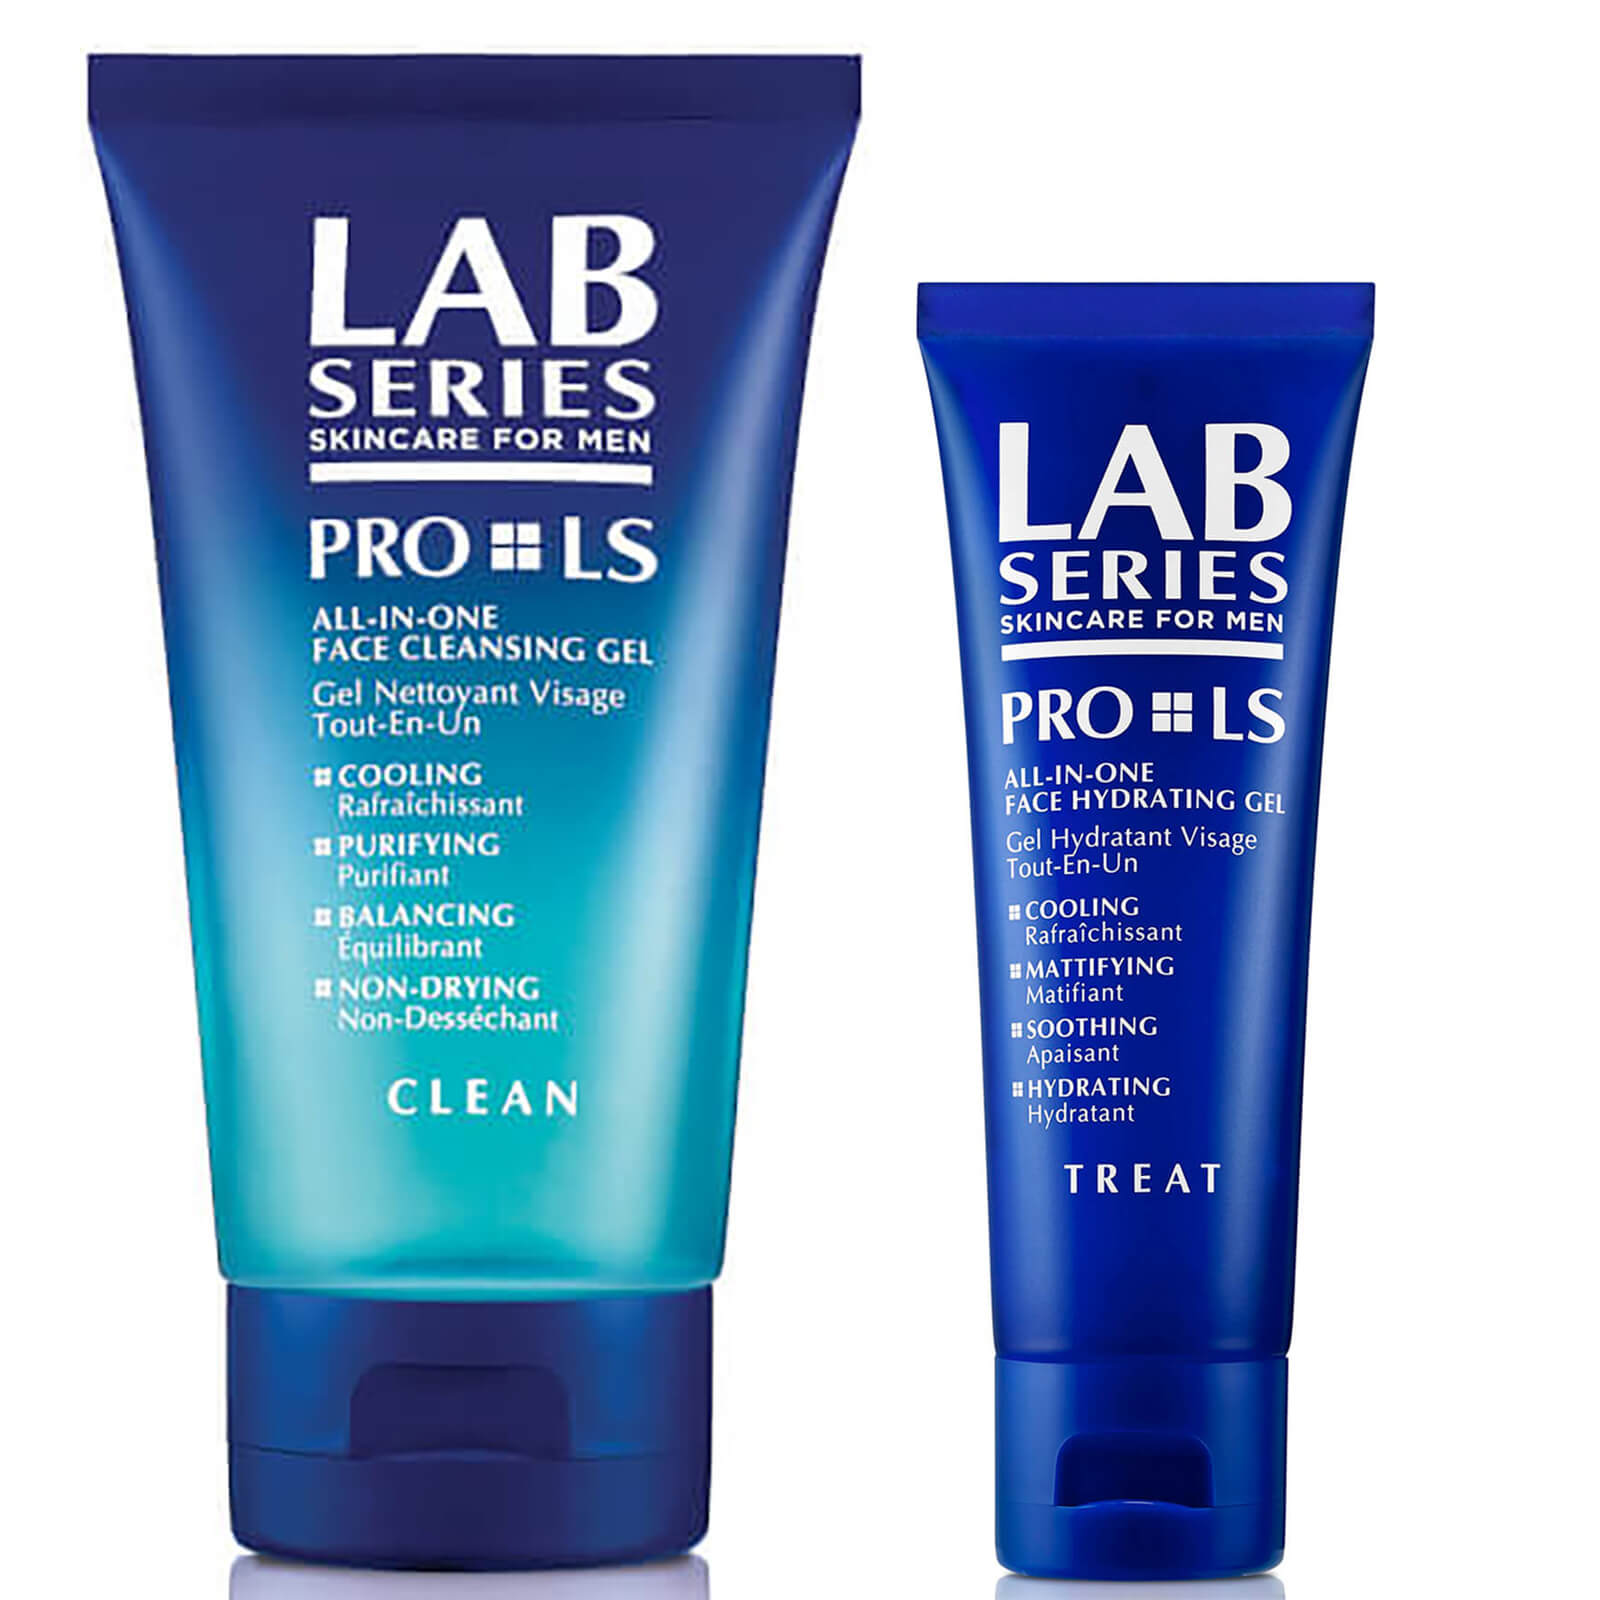 Lab Series Skincare For Men Pro LS Bundle